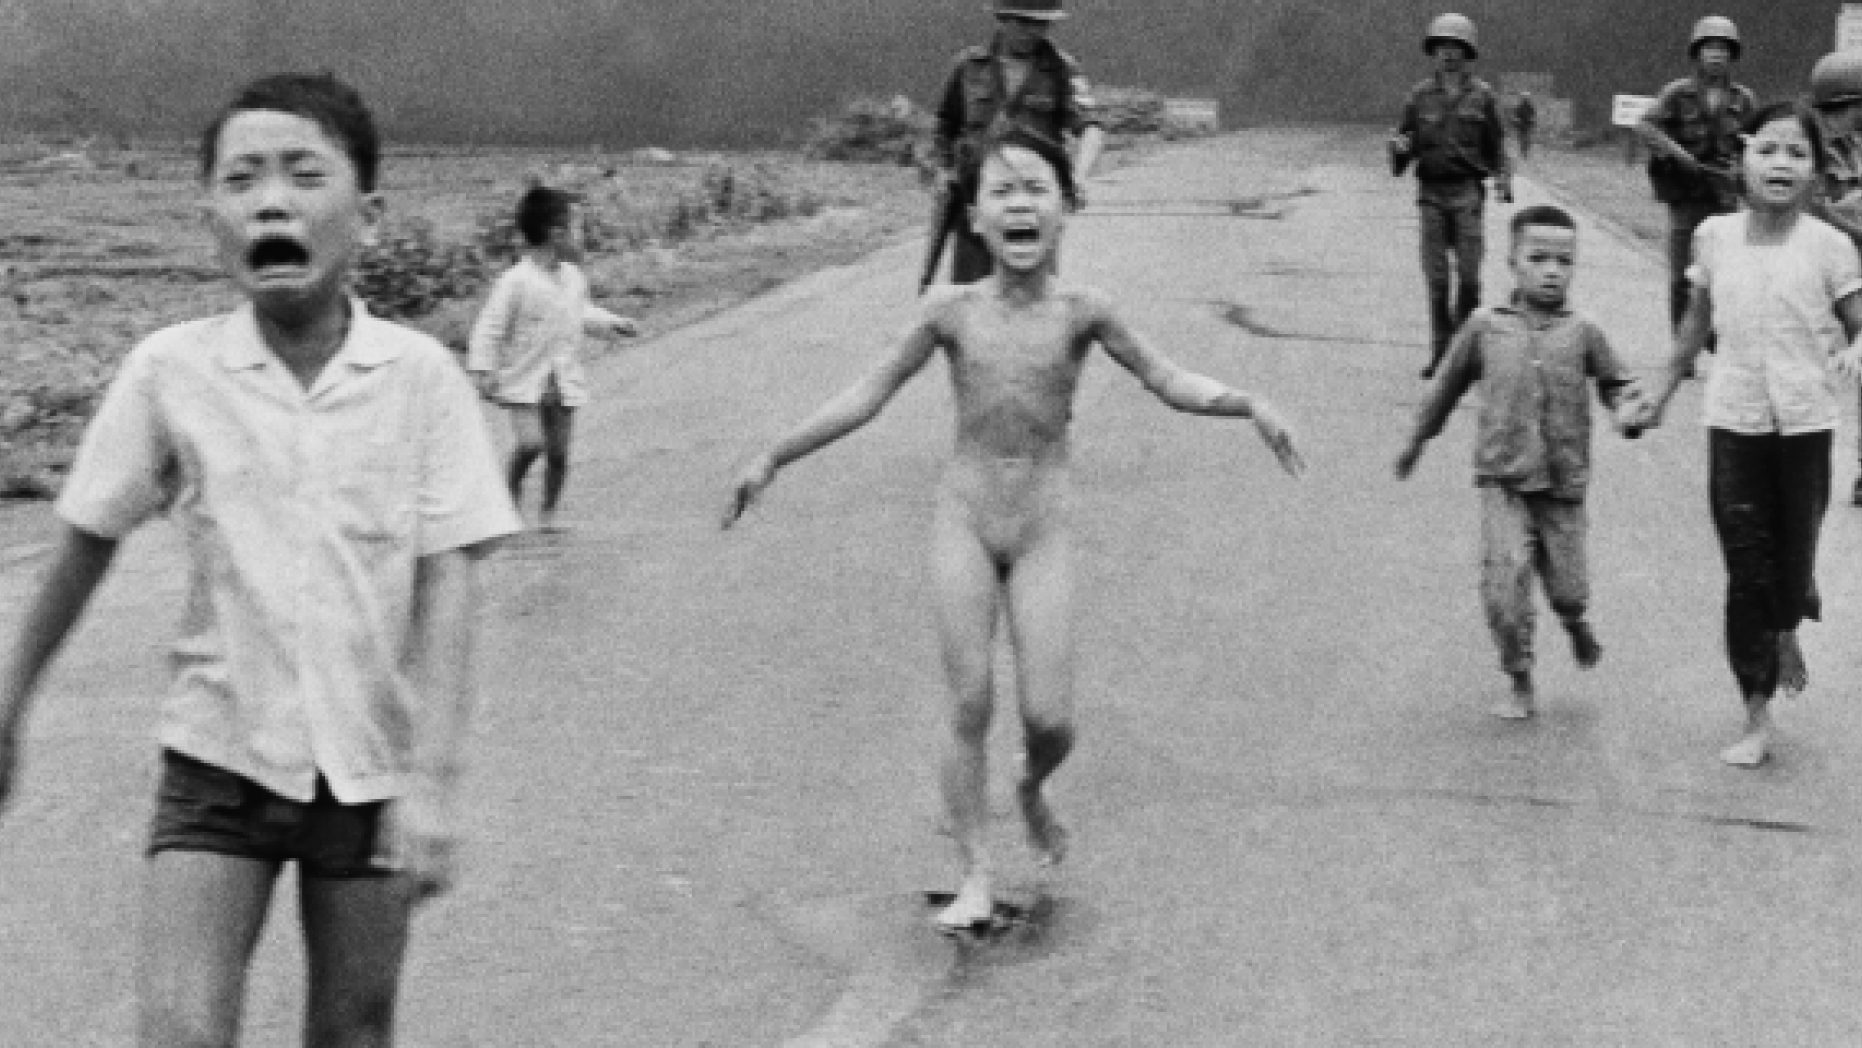 Pulitzer Prize-winning photograph, taken during the Vietnam War – Napalm bombing, by Associate Press photographer Nick Ut in 1972